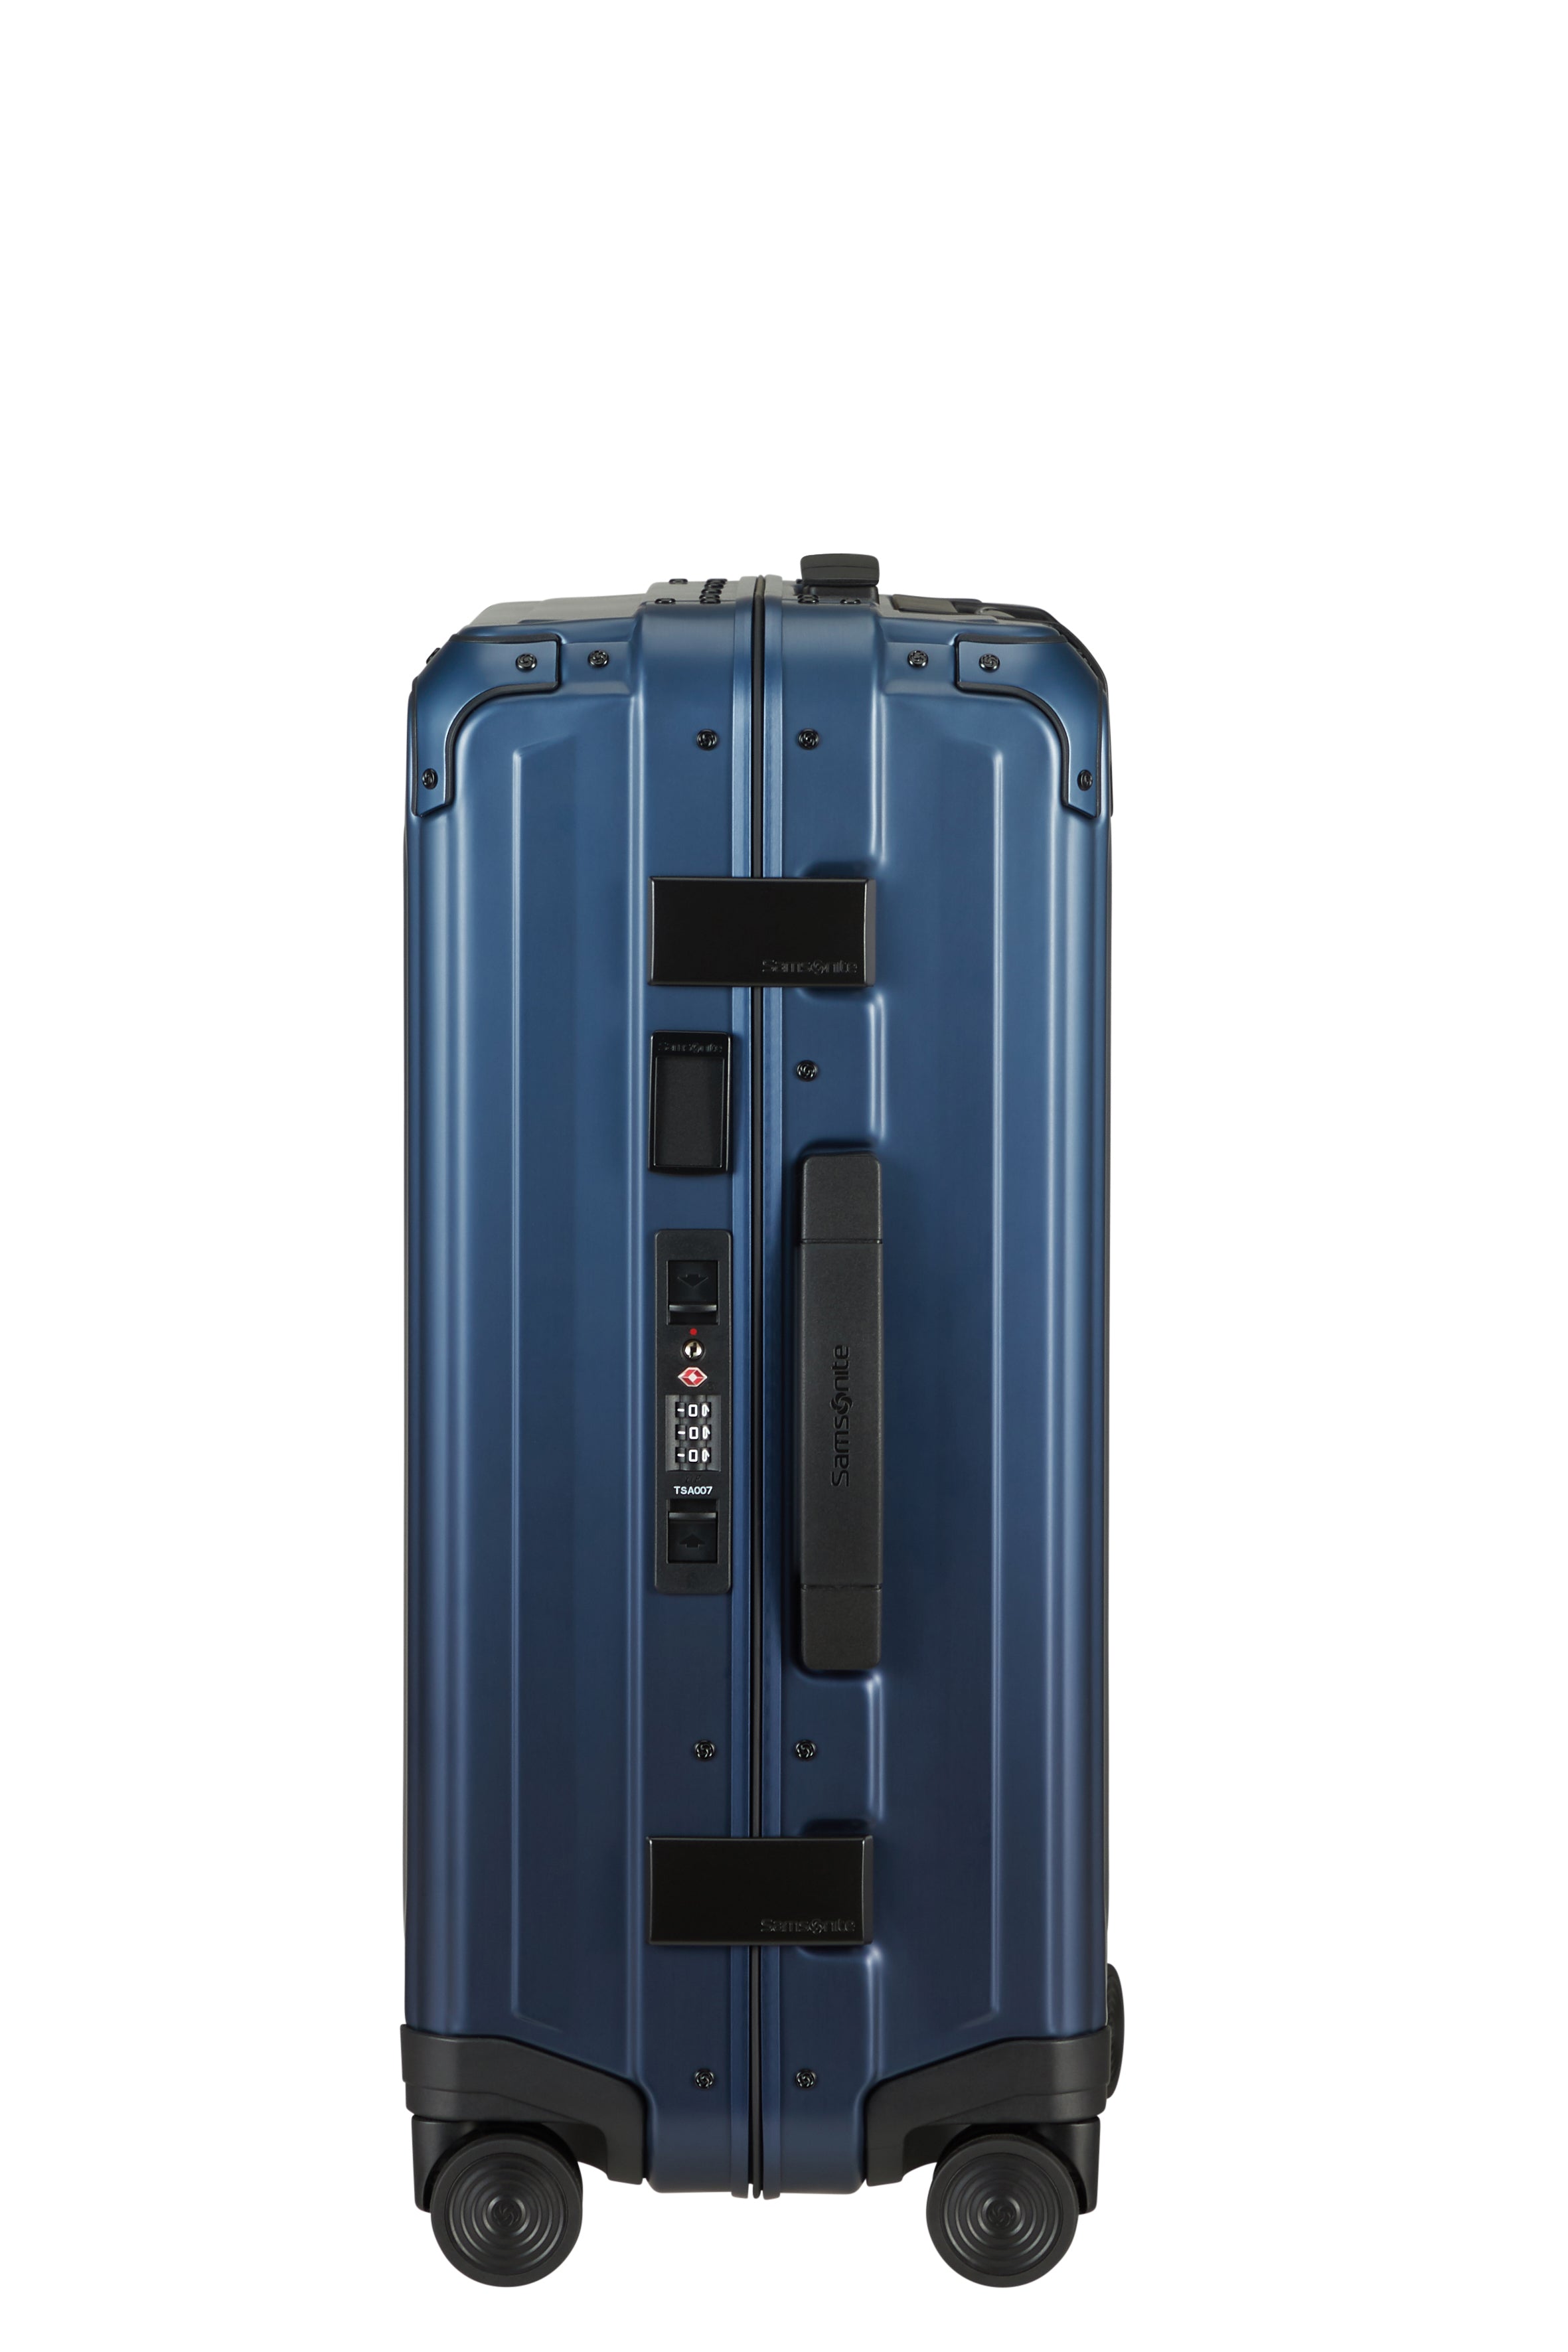 Samsonite - Lite Box ALU 55cm Small 4 Wheel Hard Suitcase - Gradient Midnight-11